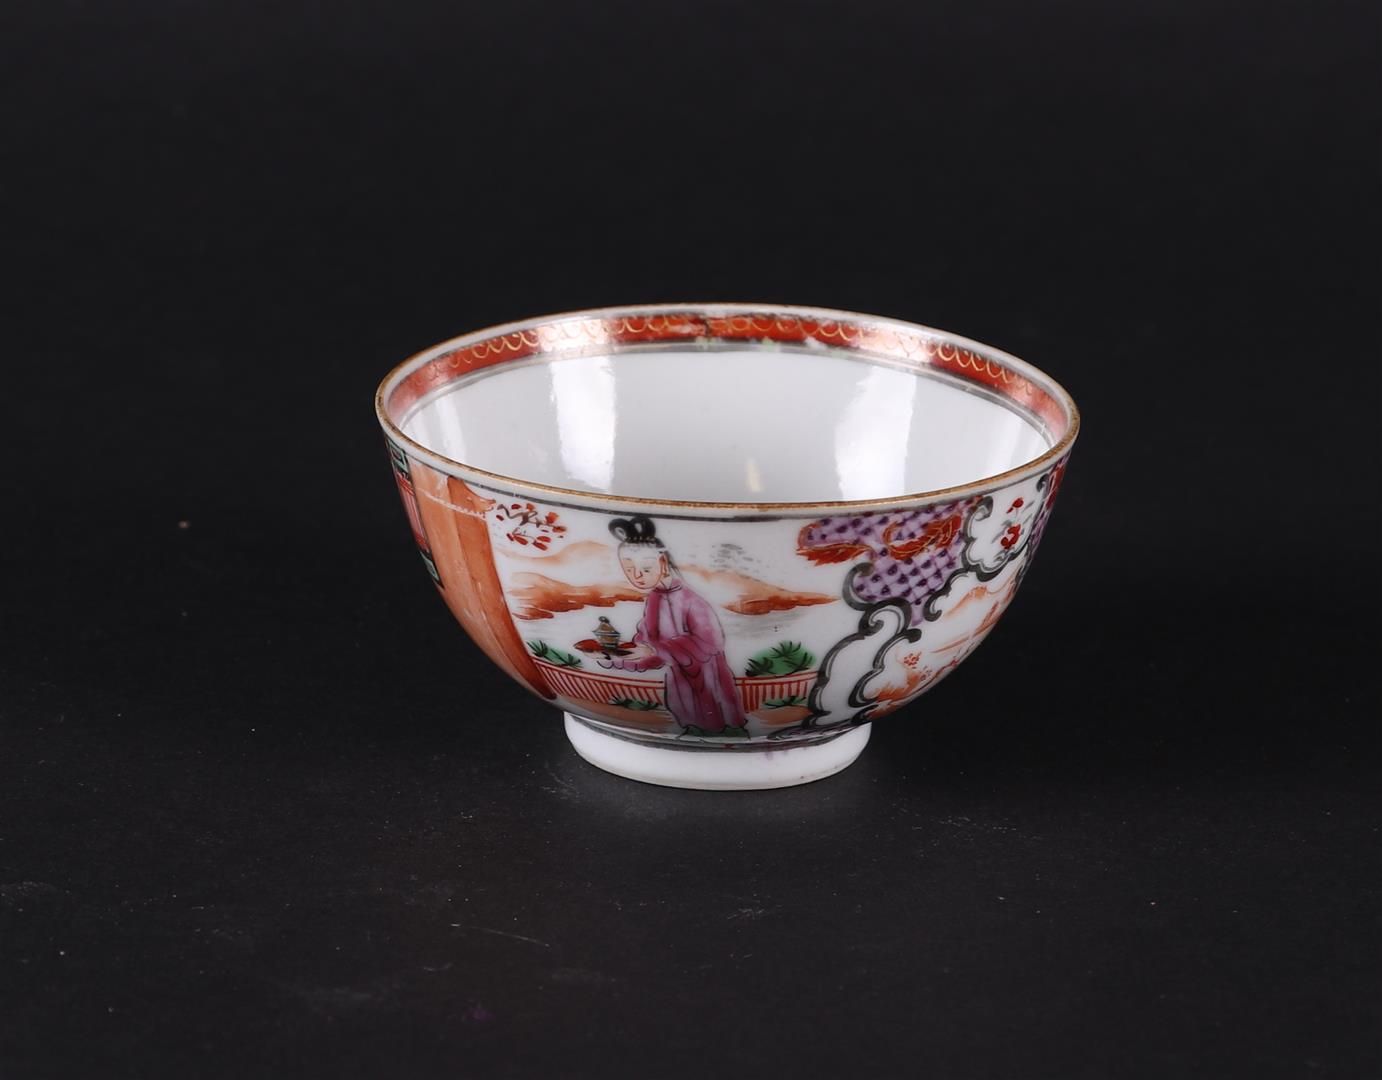 Null 瓷质法米莱碗（Manderin），格子里有山水和人物。中国，乾隆。
直径9厘米。